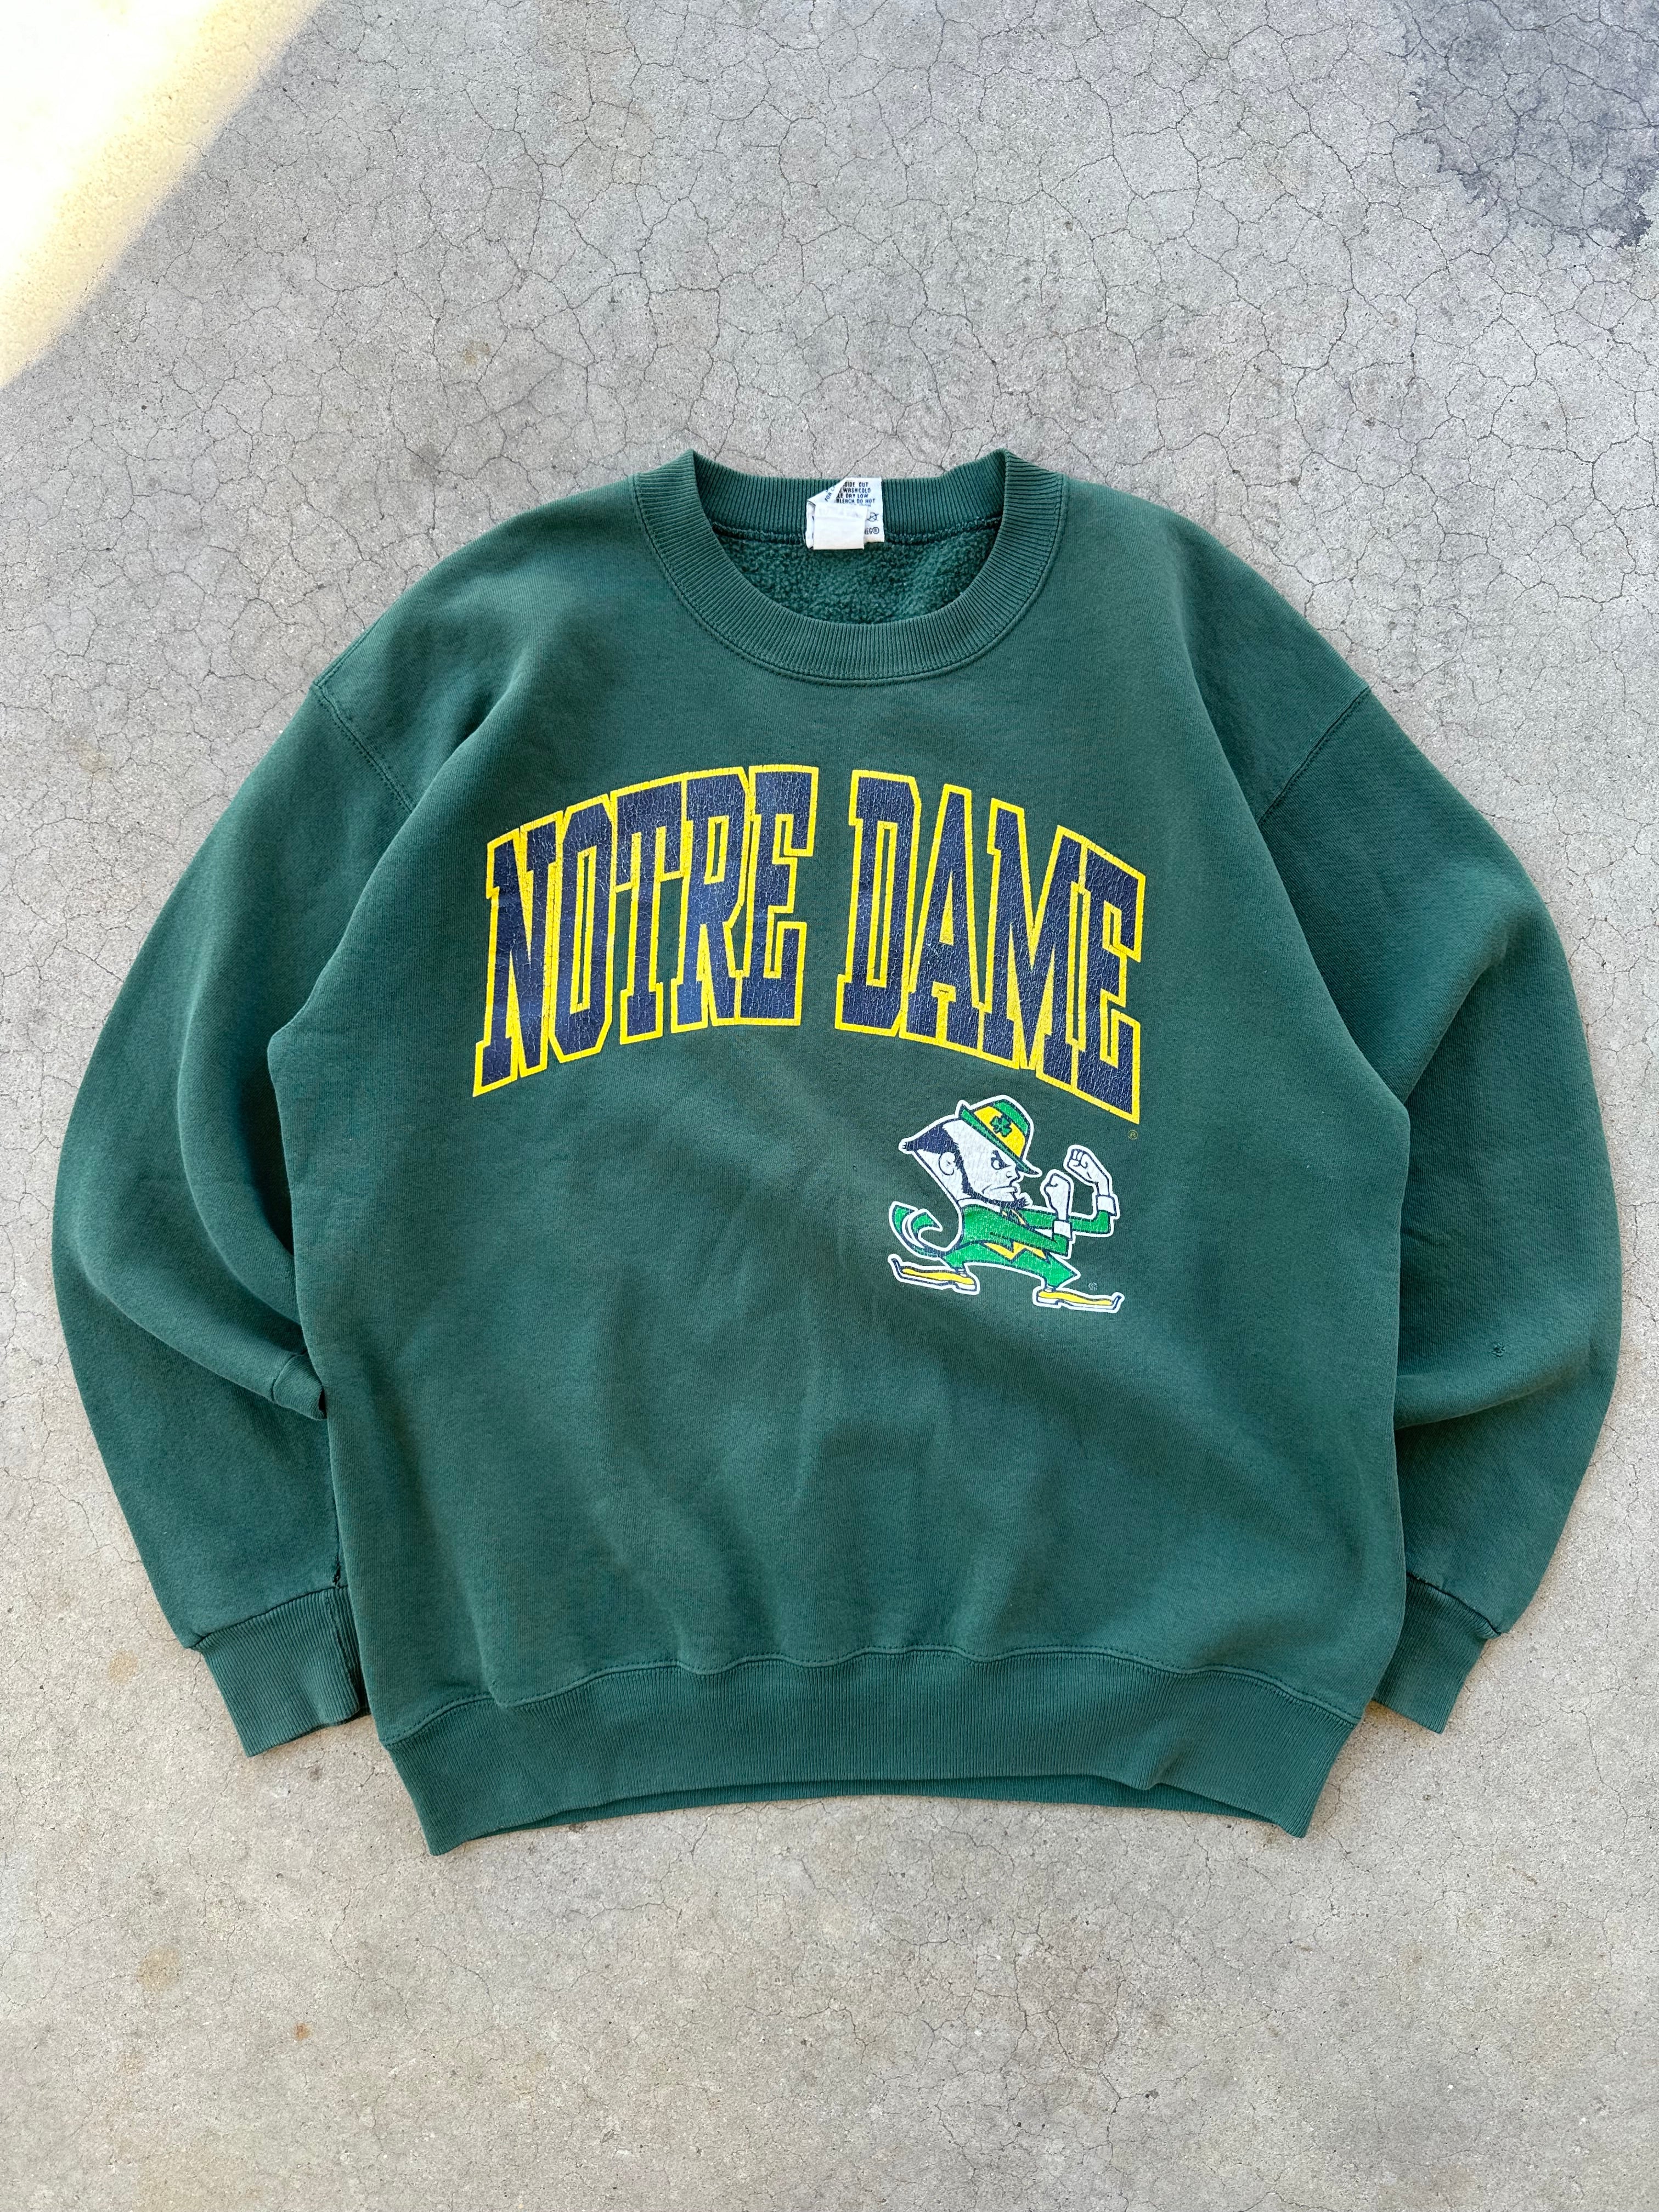 1990s Notre Dame Crewneck (L/XL)